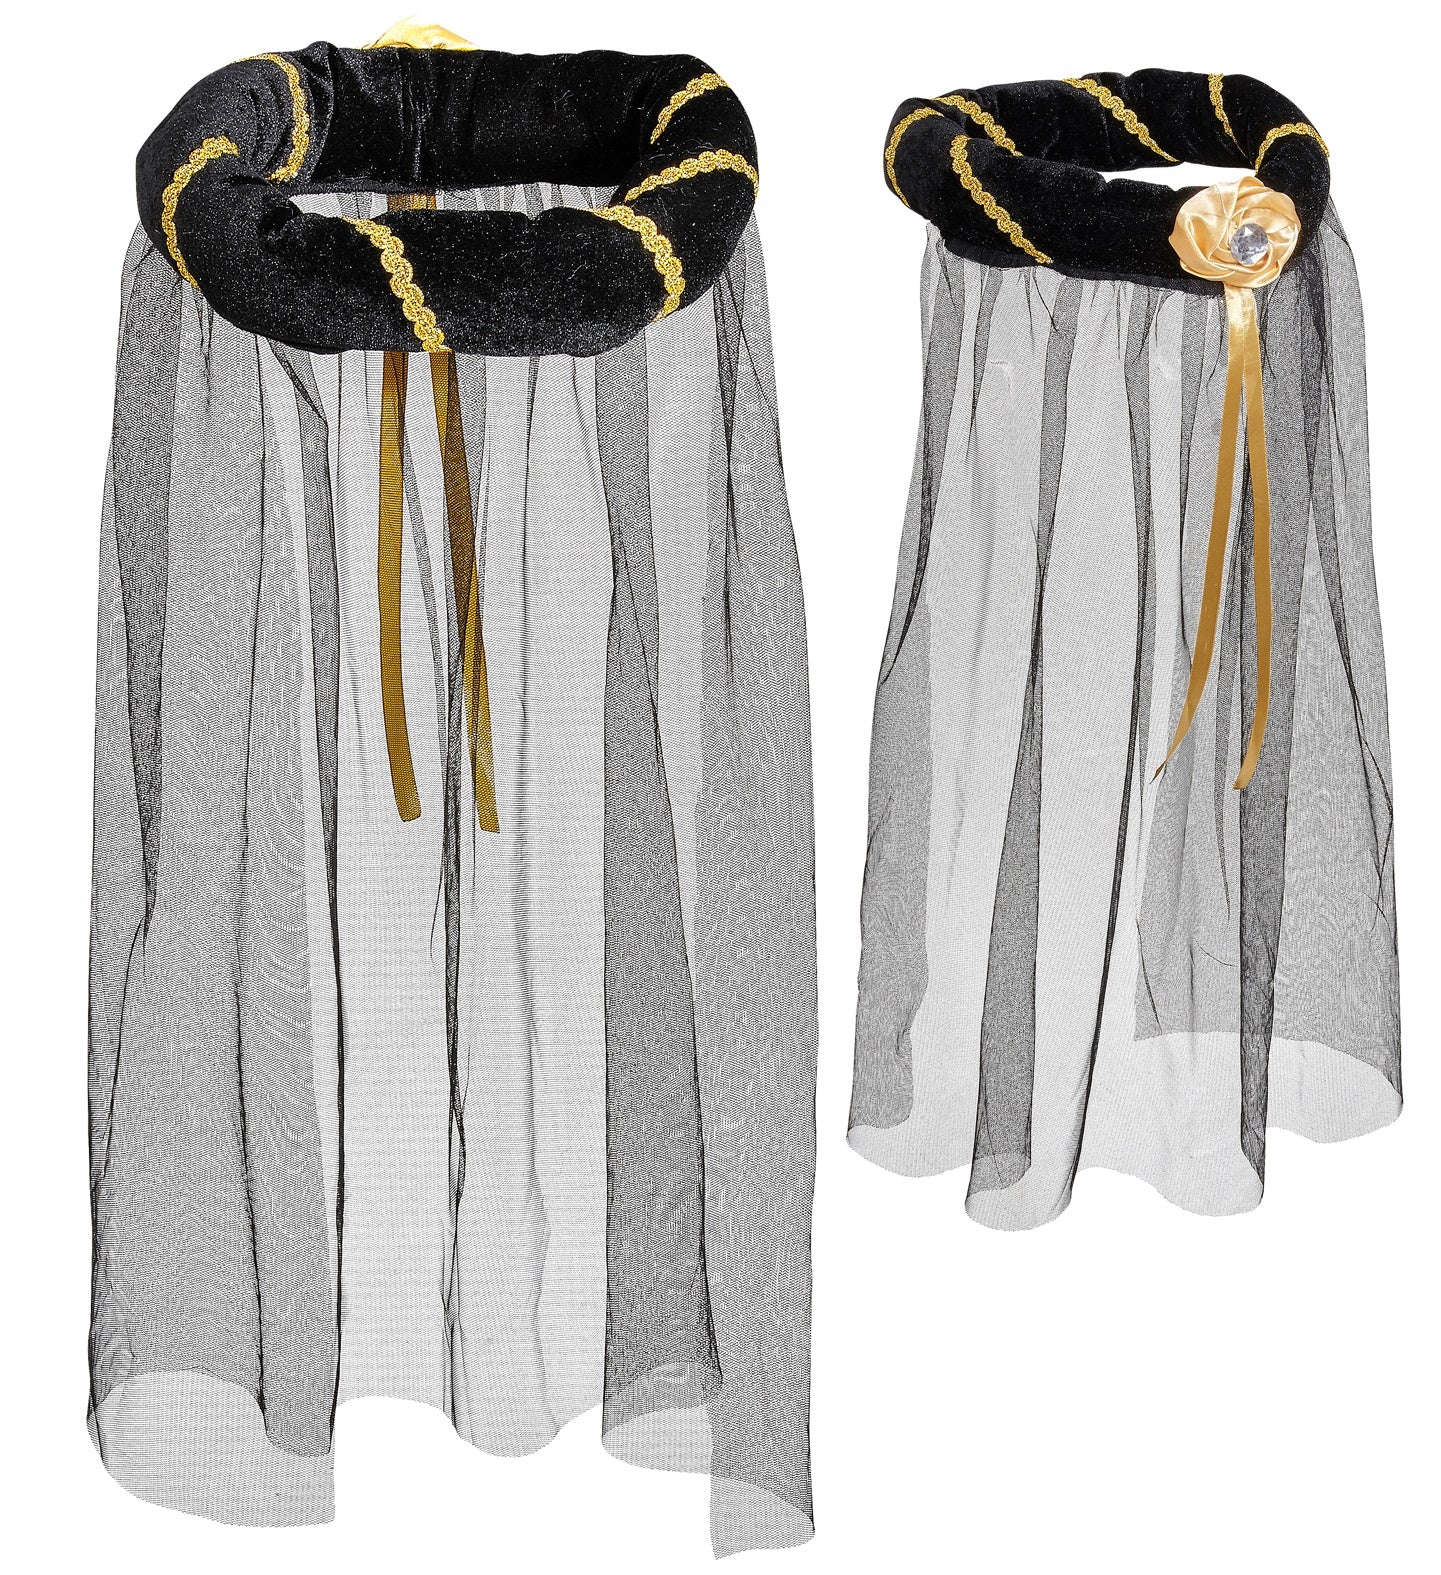 Black Medieval Headdress with Veil